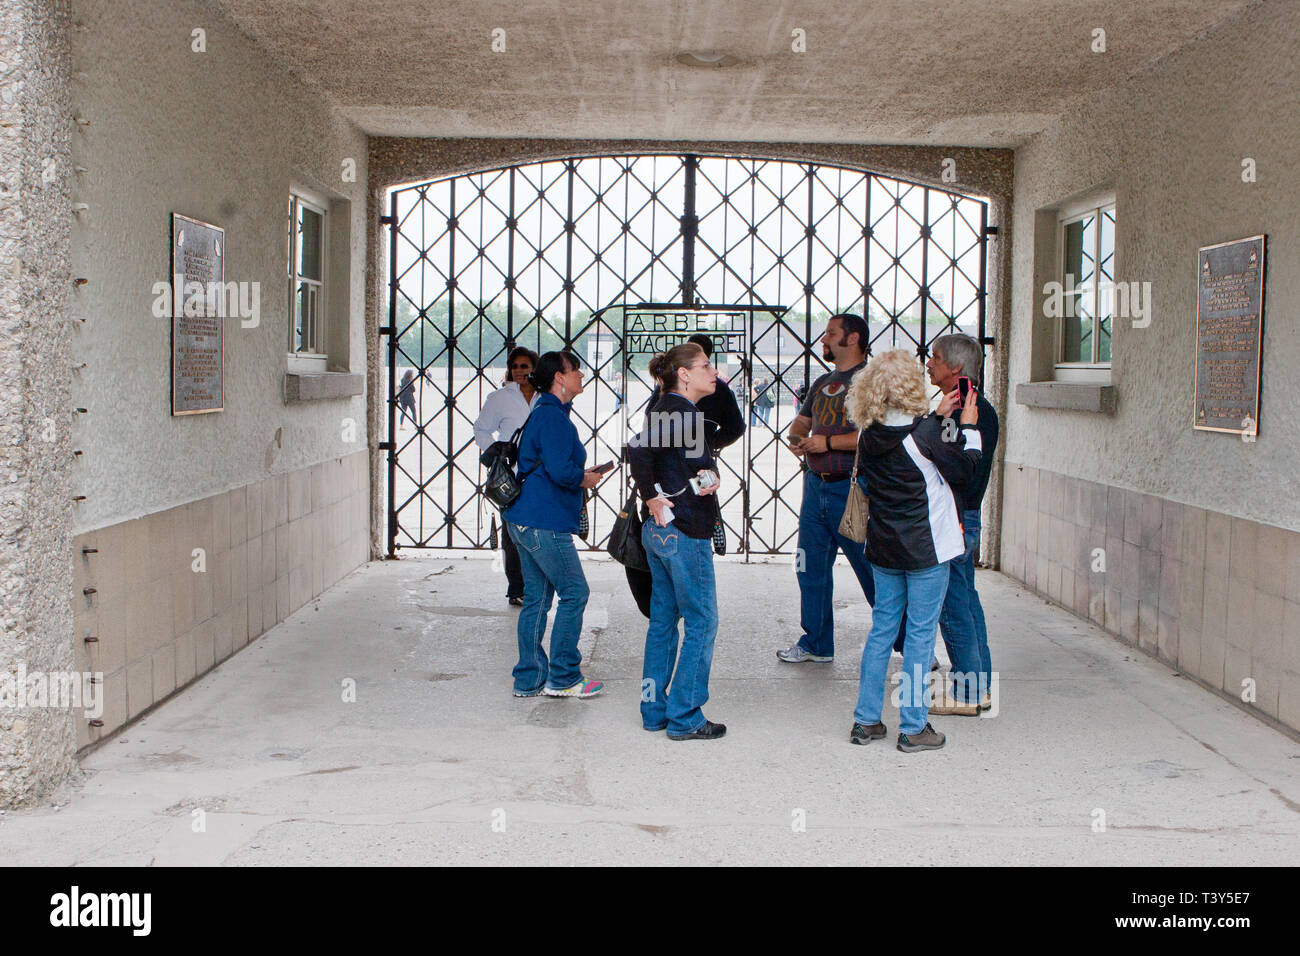 Arbeit macht frei gate en Dachau Foto de stock